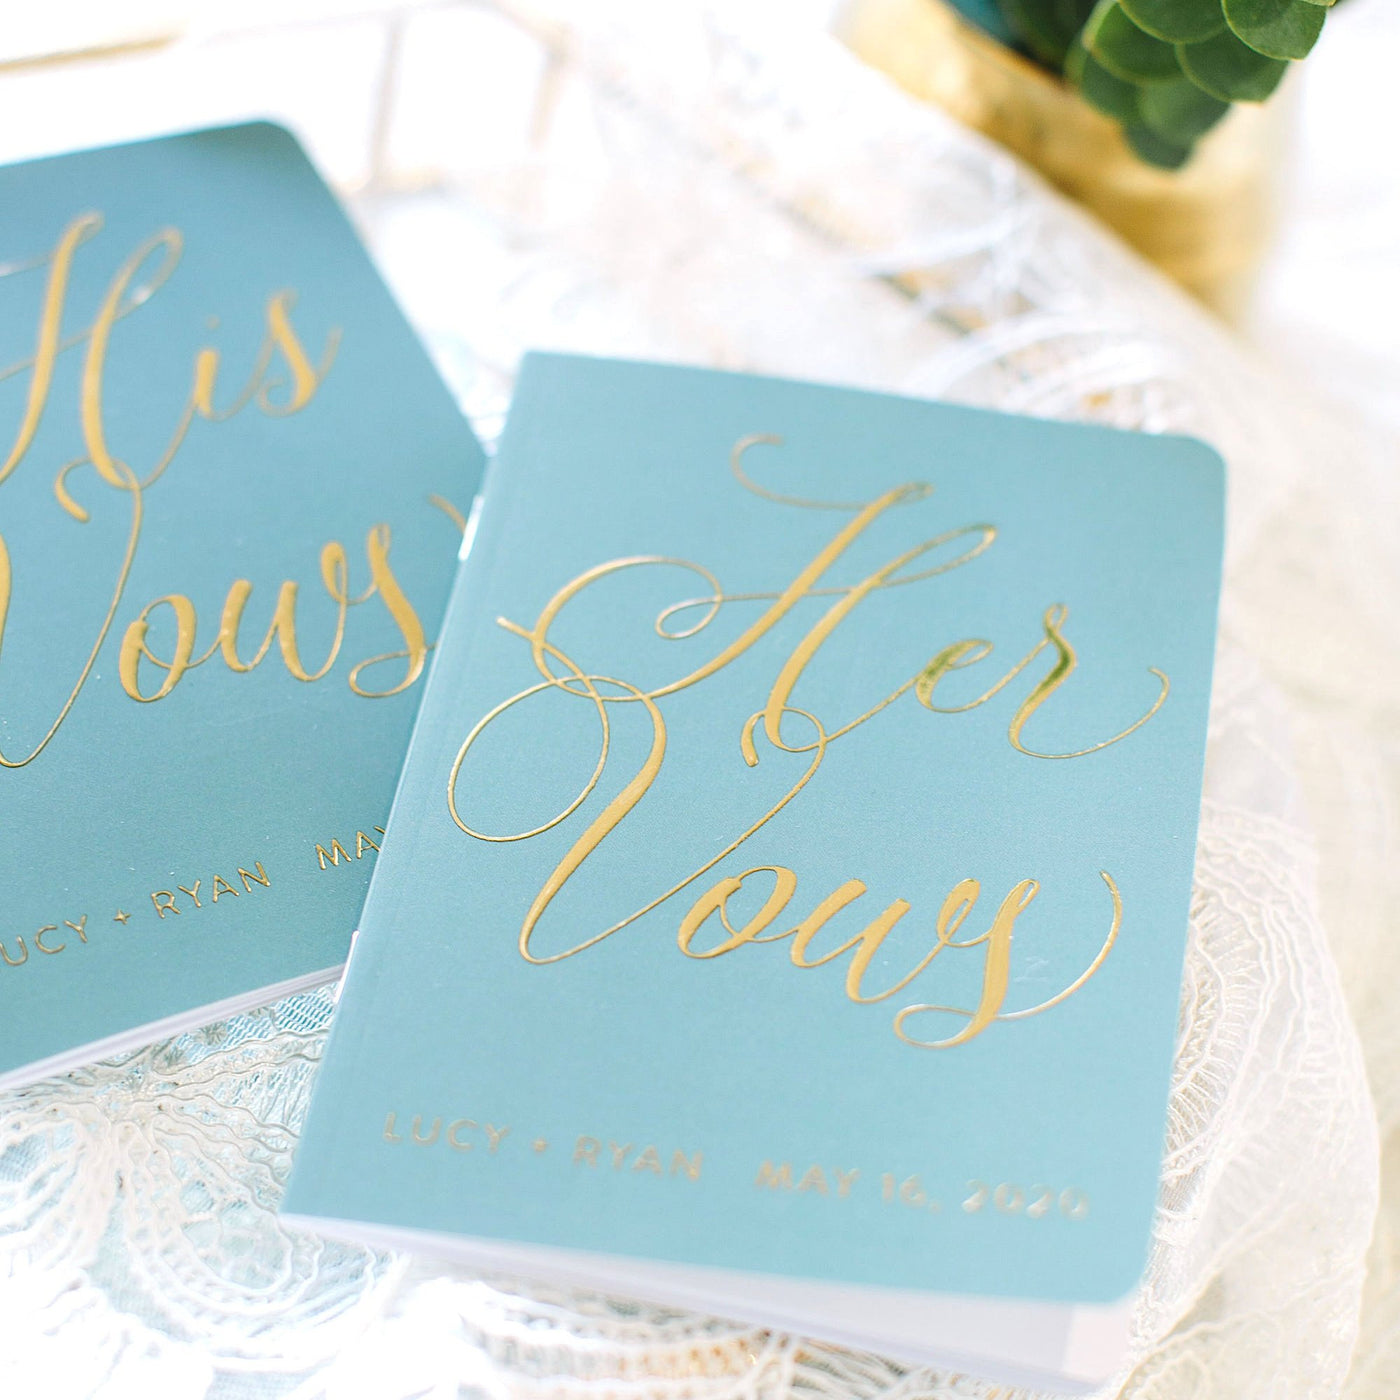 Custom Wedding Vow Books